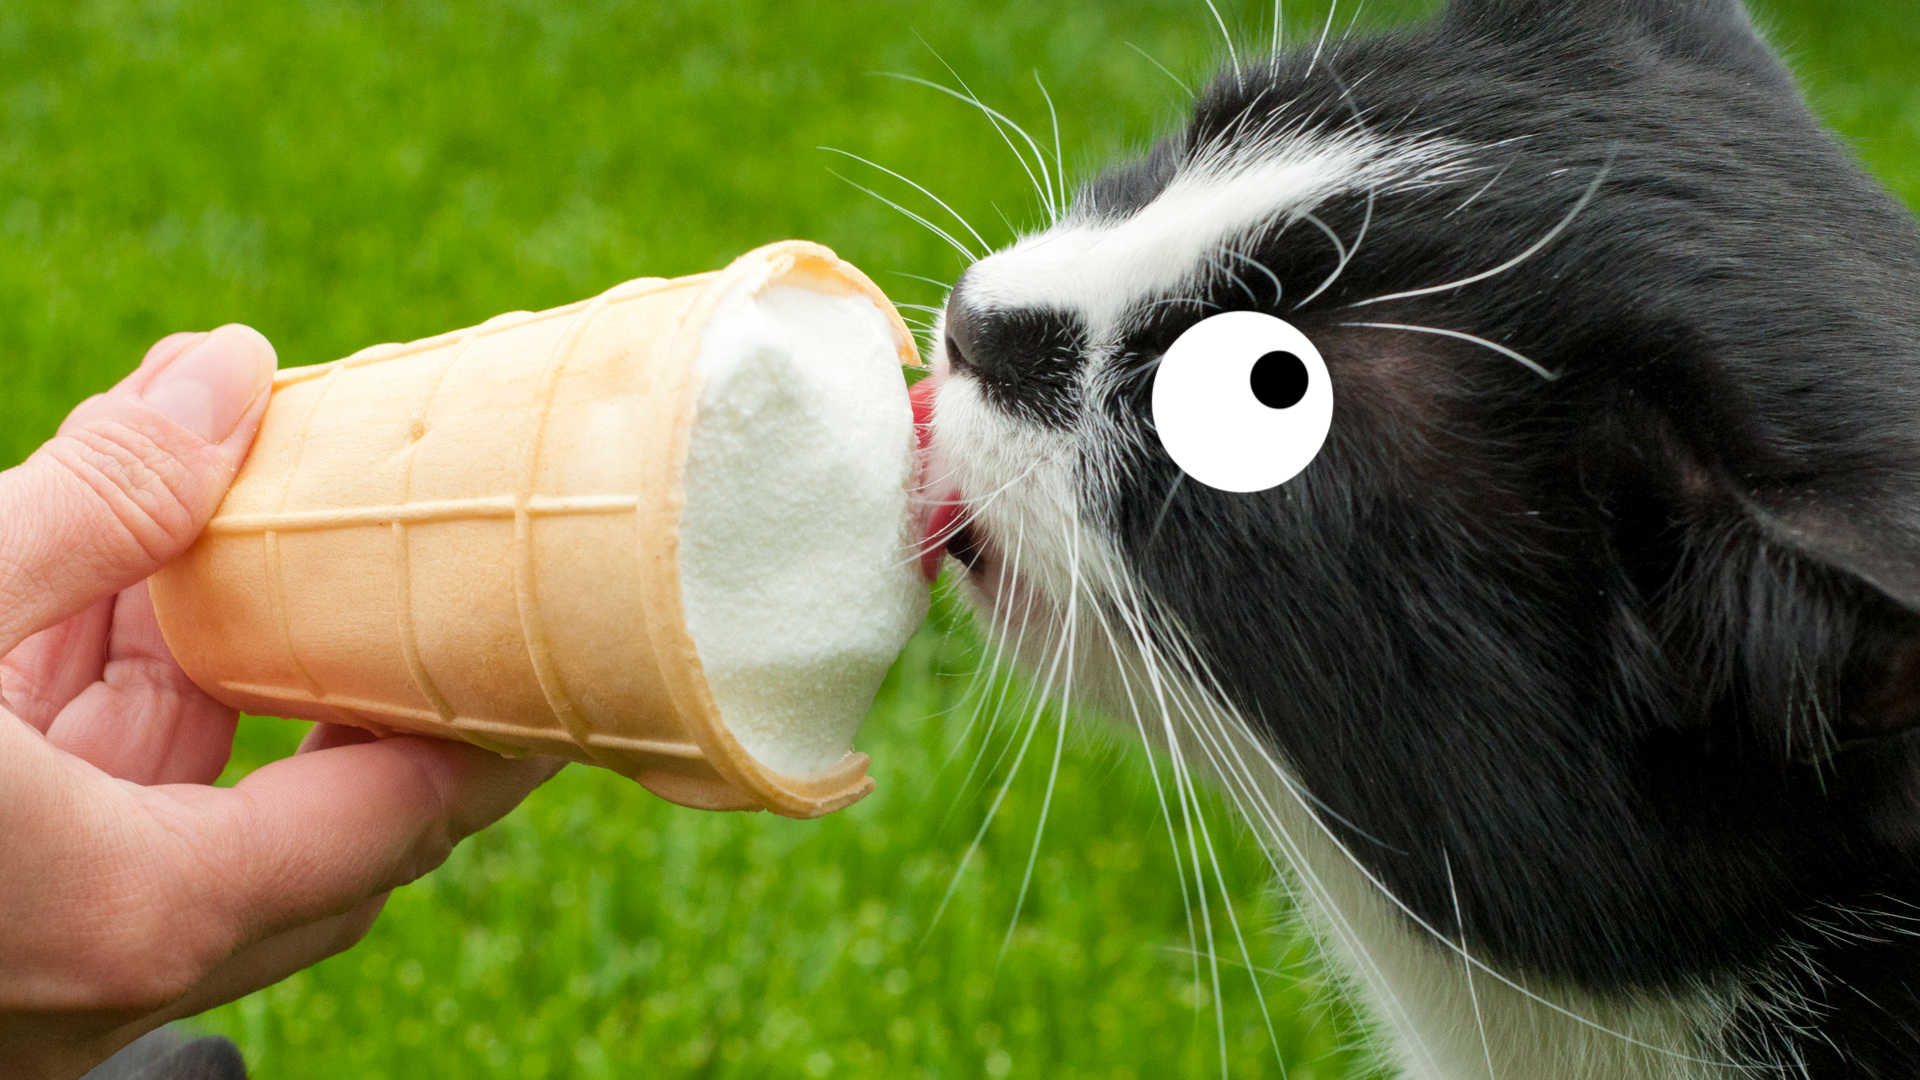 A cat licking an ice cream